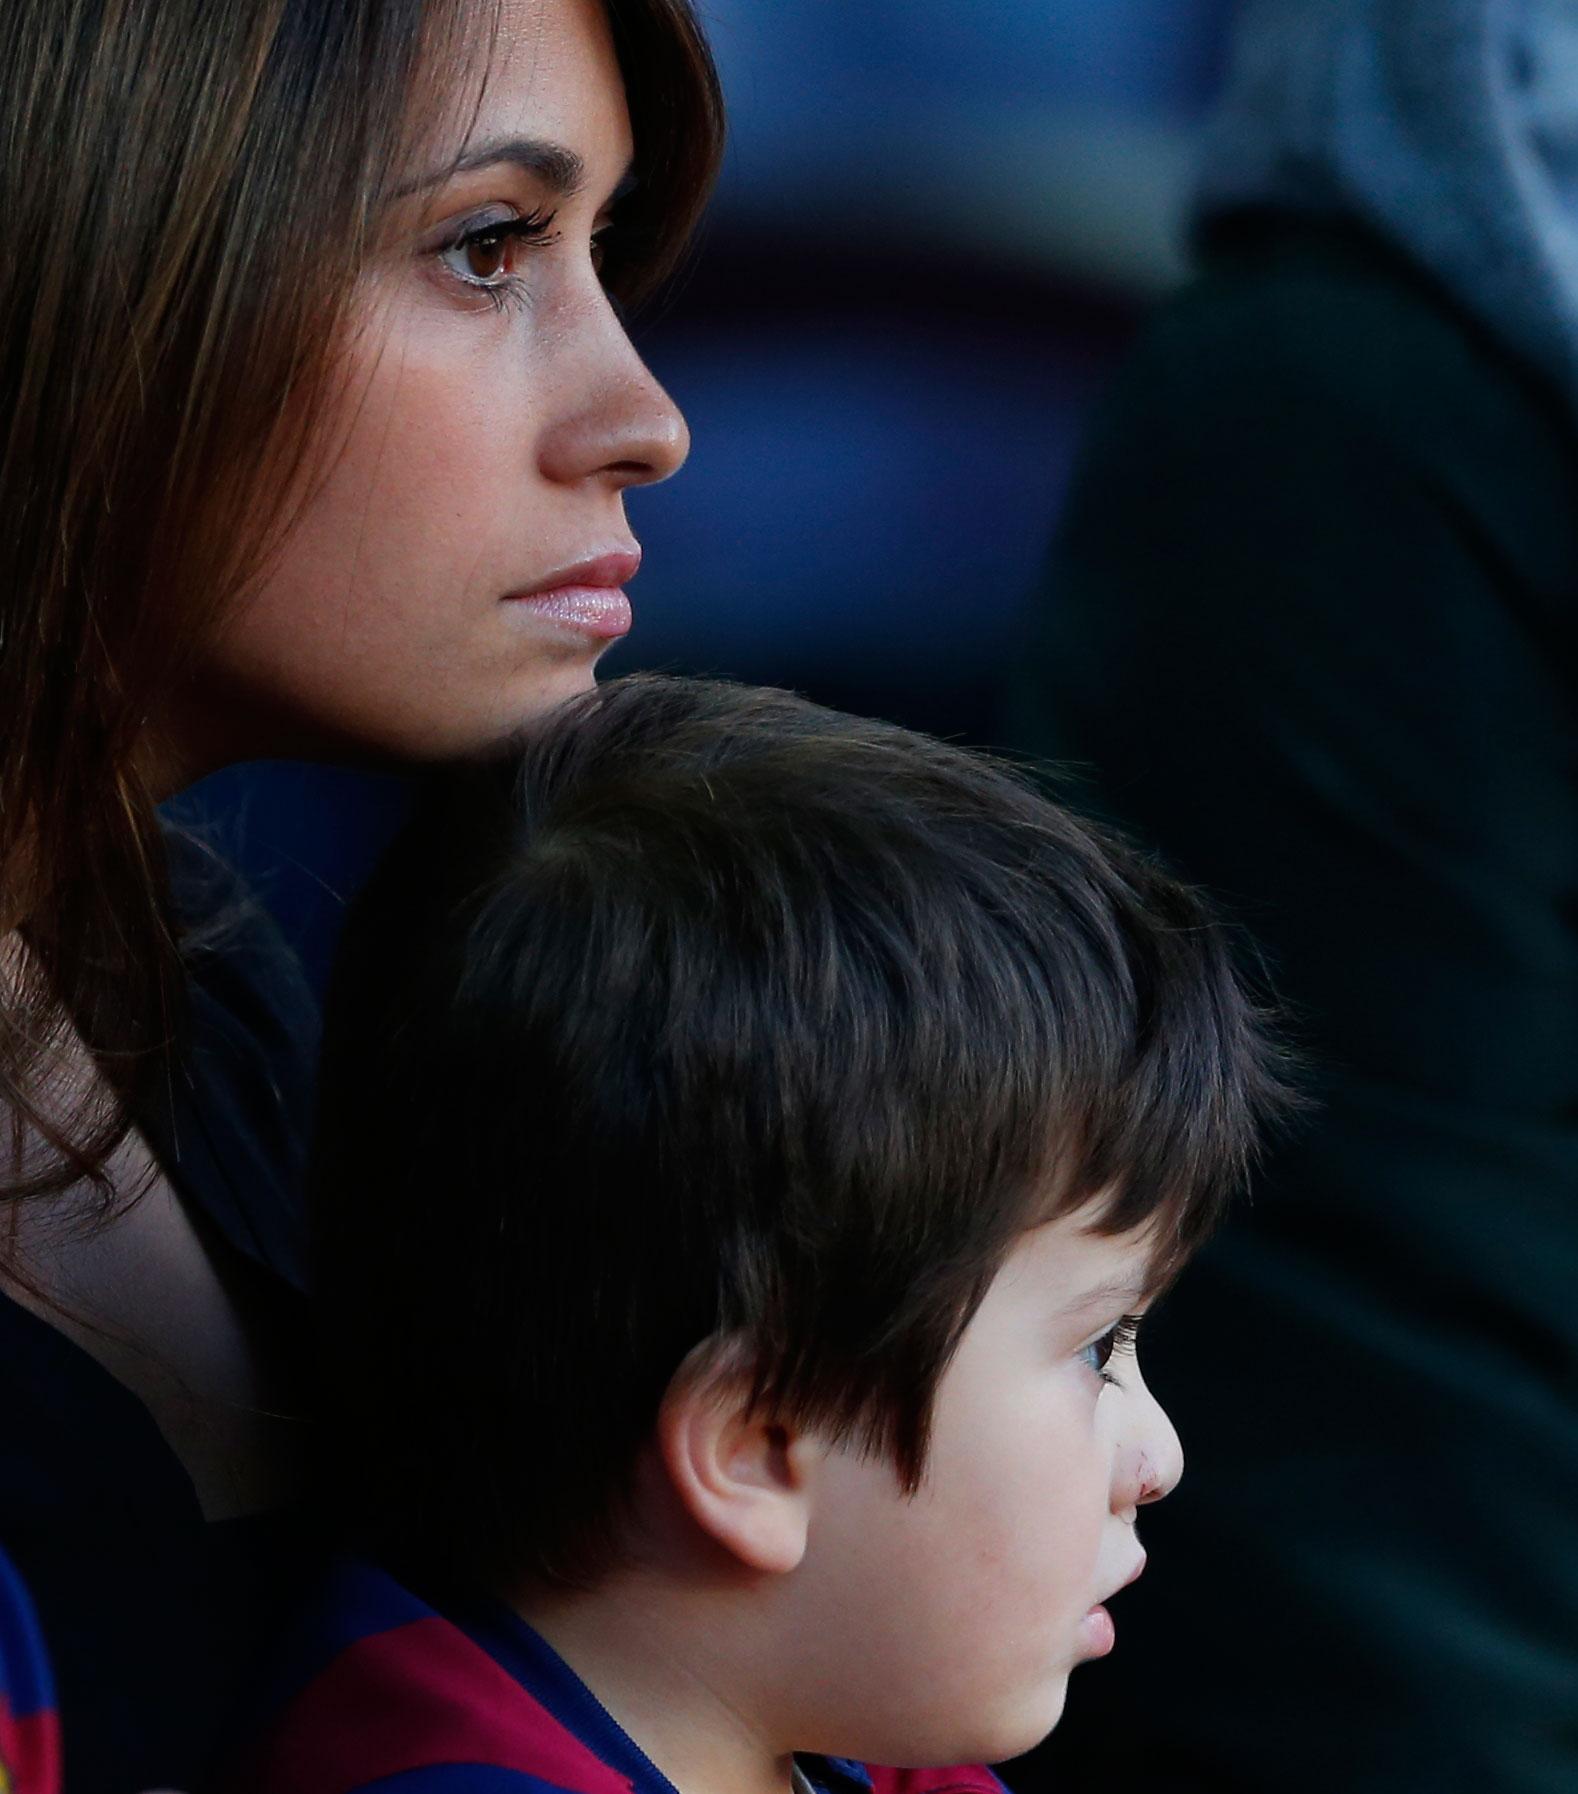 Lionel Messis flickvän, Antonella Roccuzzo, tillsammans med sonen Thiago Messi.